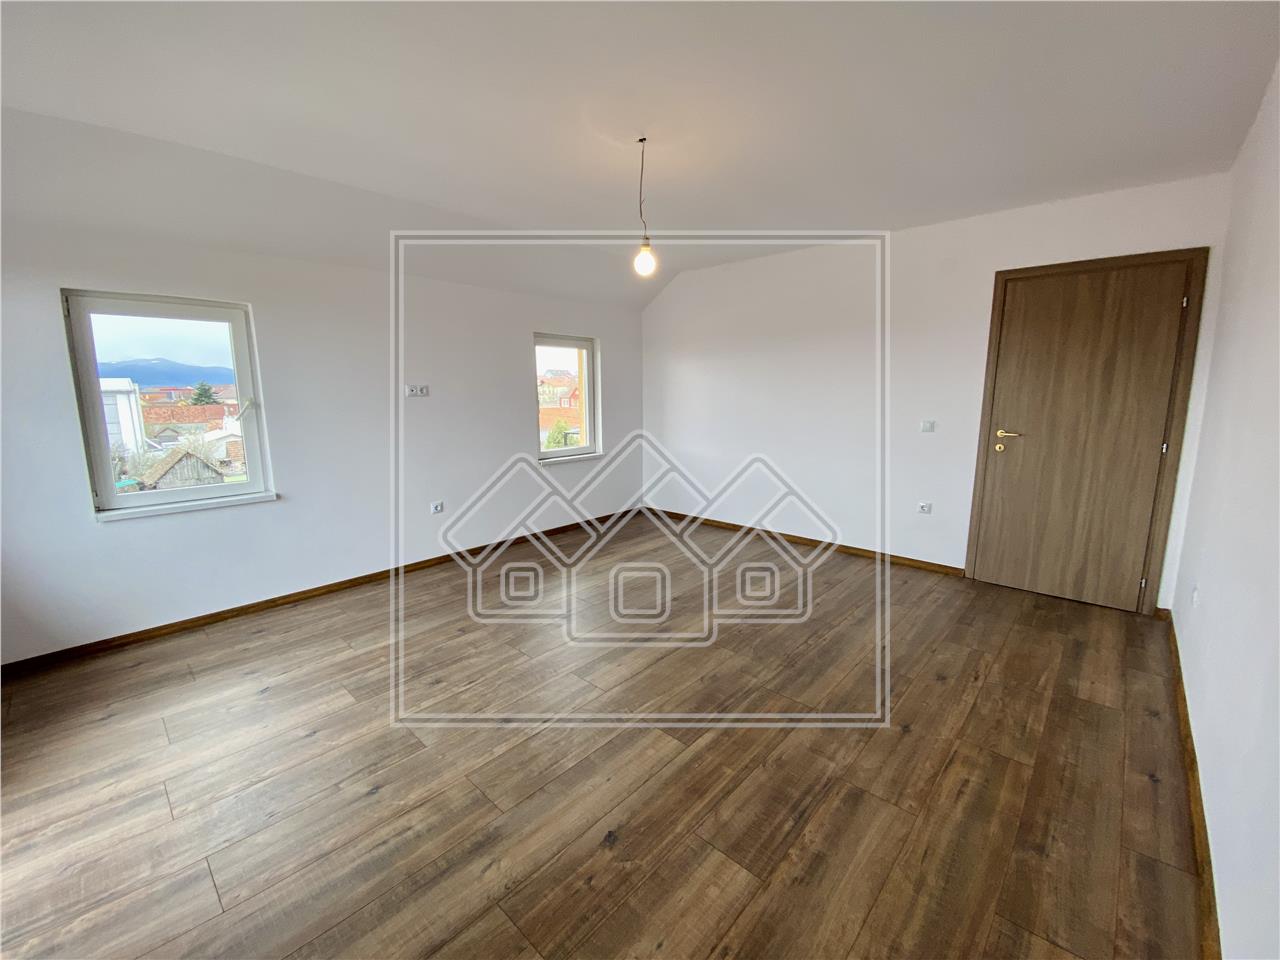 Apartament 3 rooms for sale in Sibiu - Turnisor area